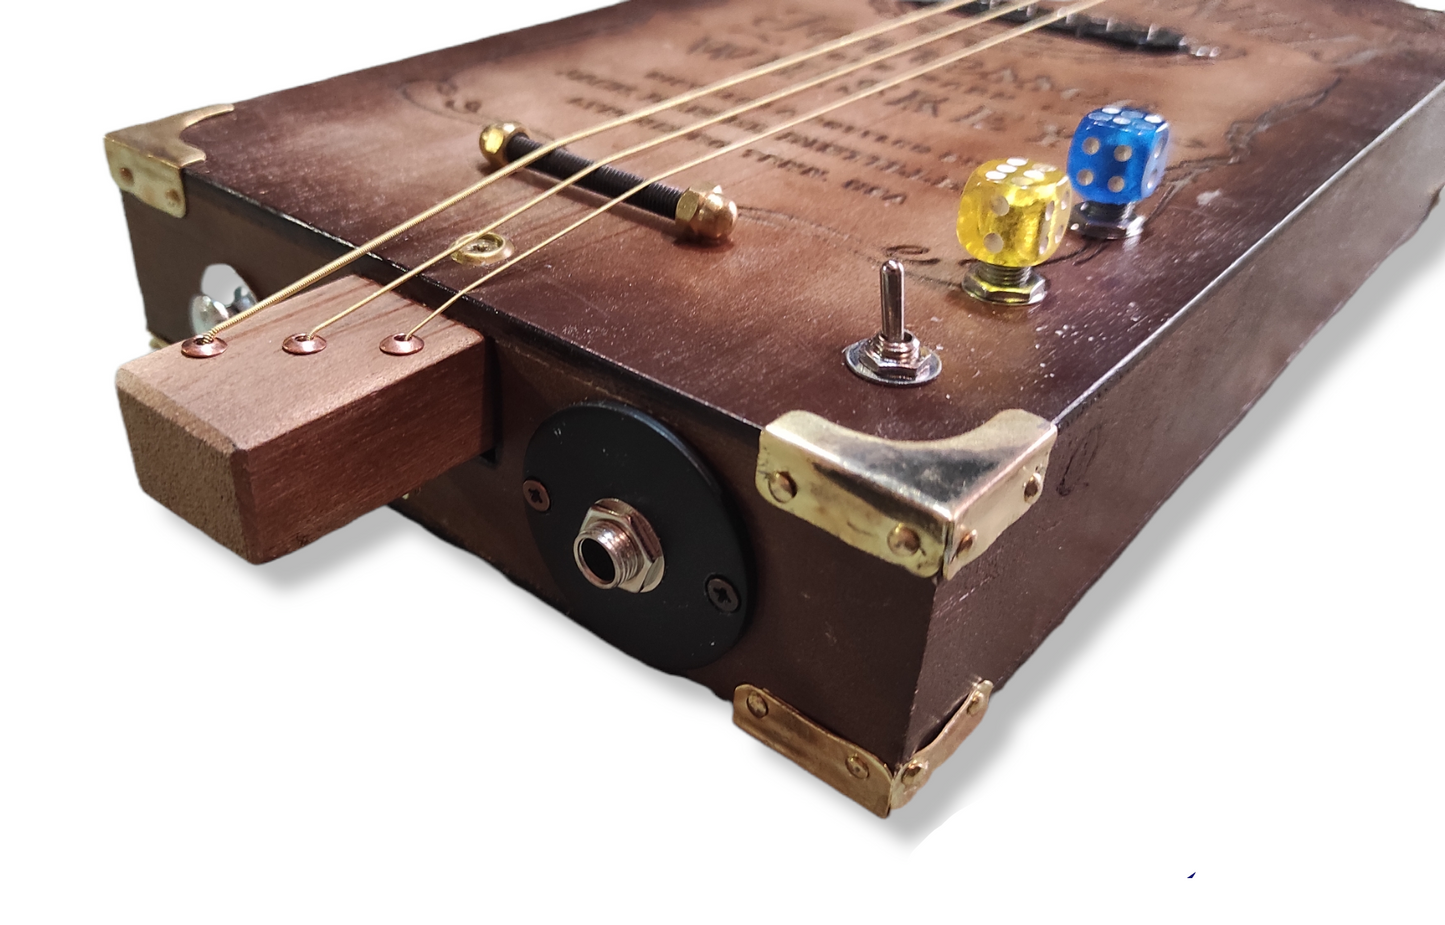 Jack Daniel's 3tpv Special cigar box guitar Matteacci's Made in Italy